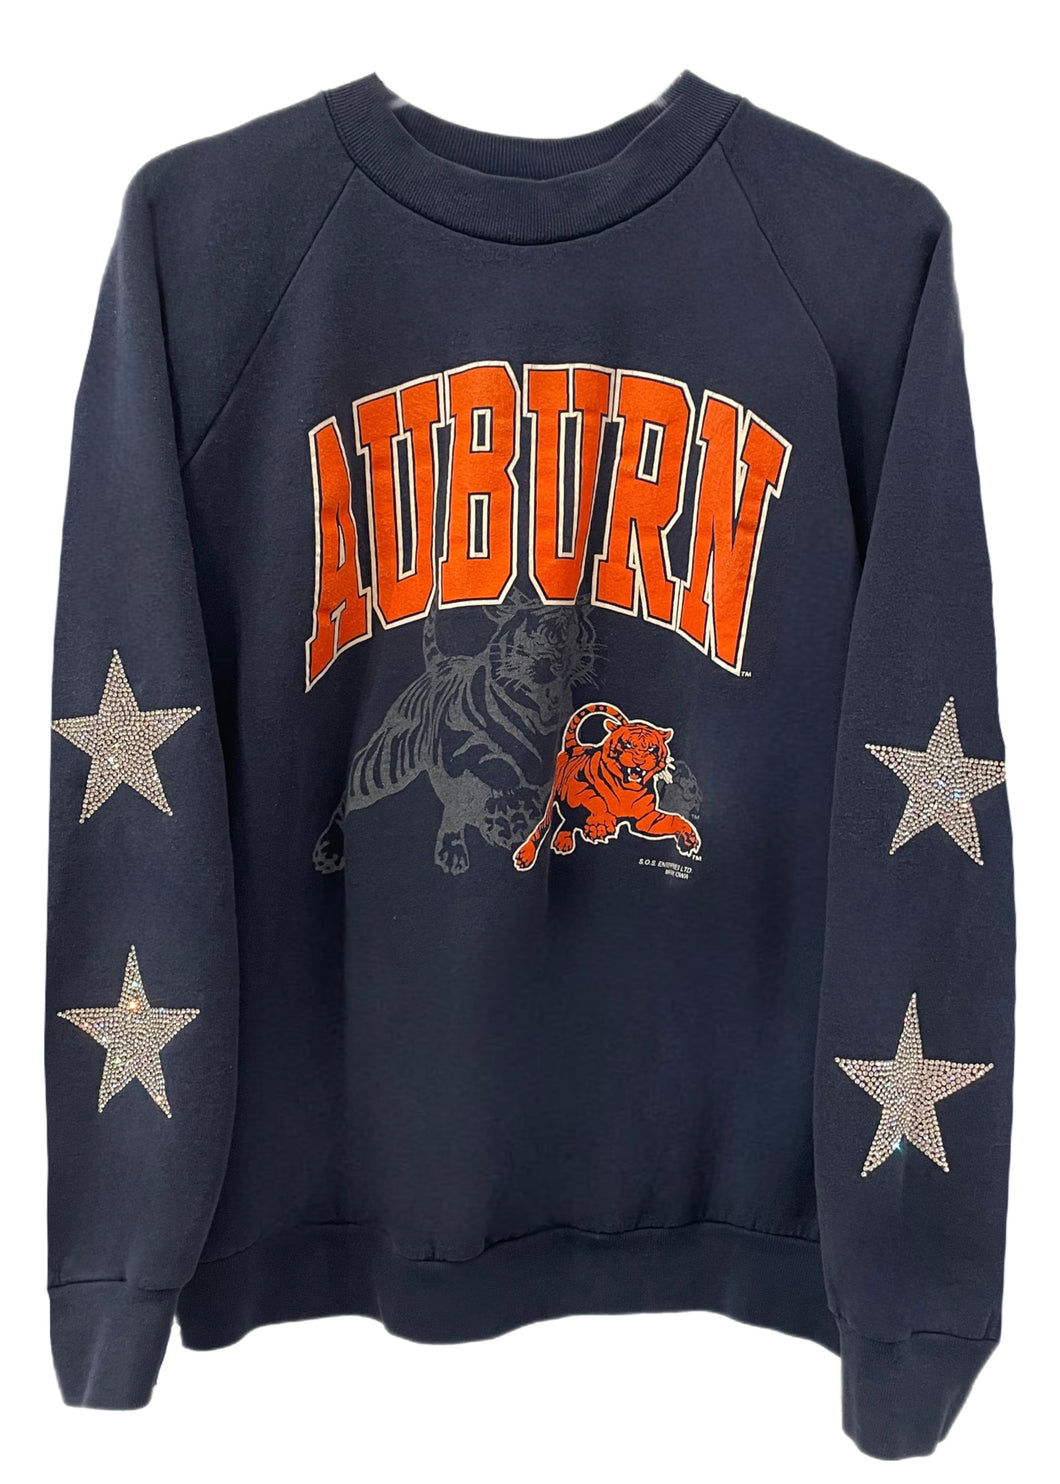 Auburn University, Tigers One of a KIND Vintage Sweatshirt with Crystal Star Design.